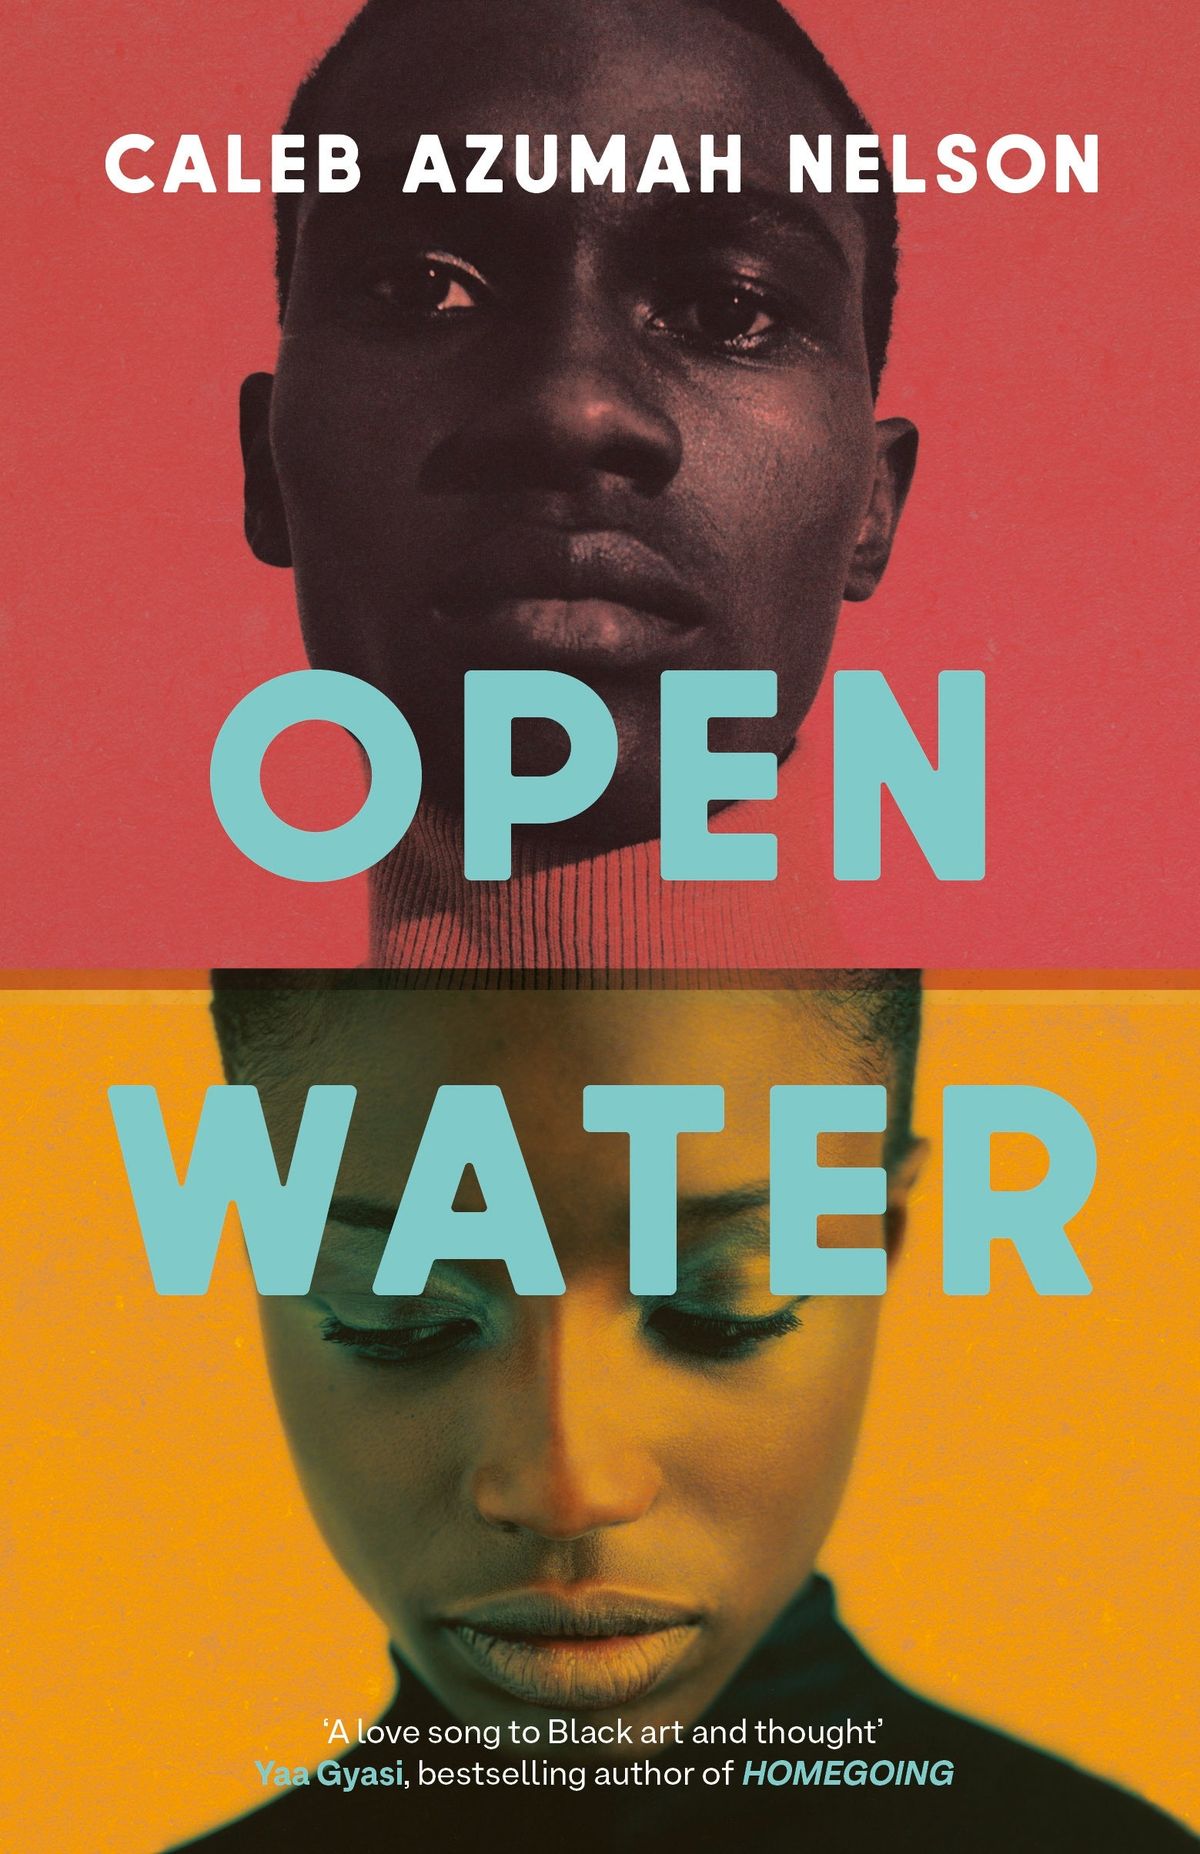 Open Water a lui Caleb Azumah Nelson este devastator de vulnerabil – EXTRAS EXCLUSIV